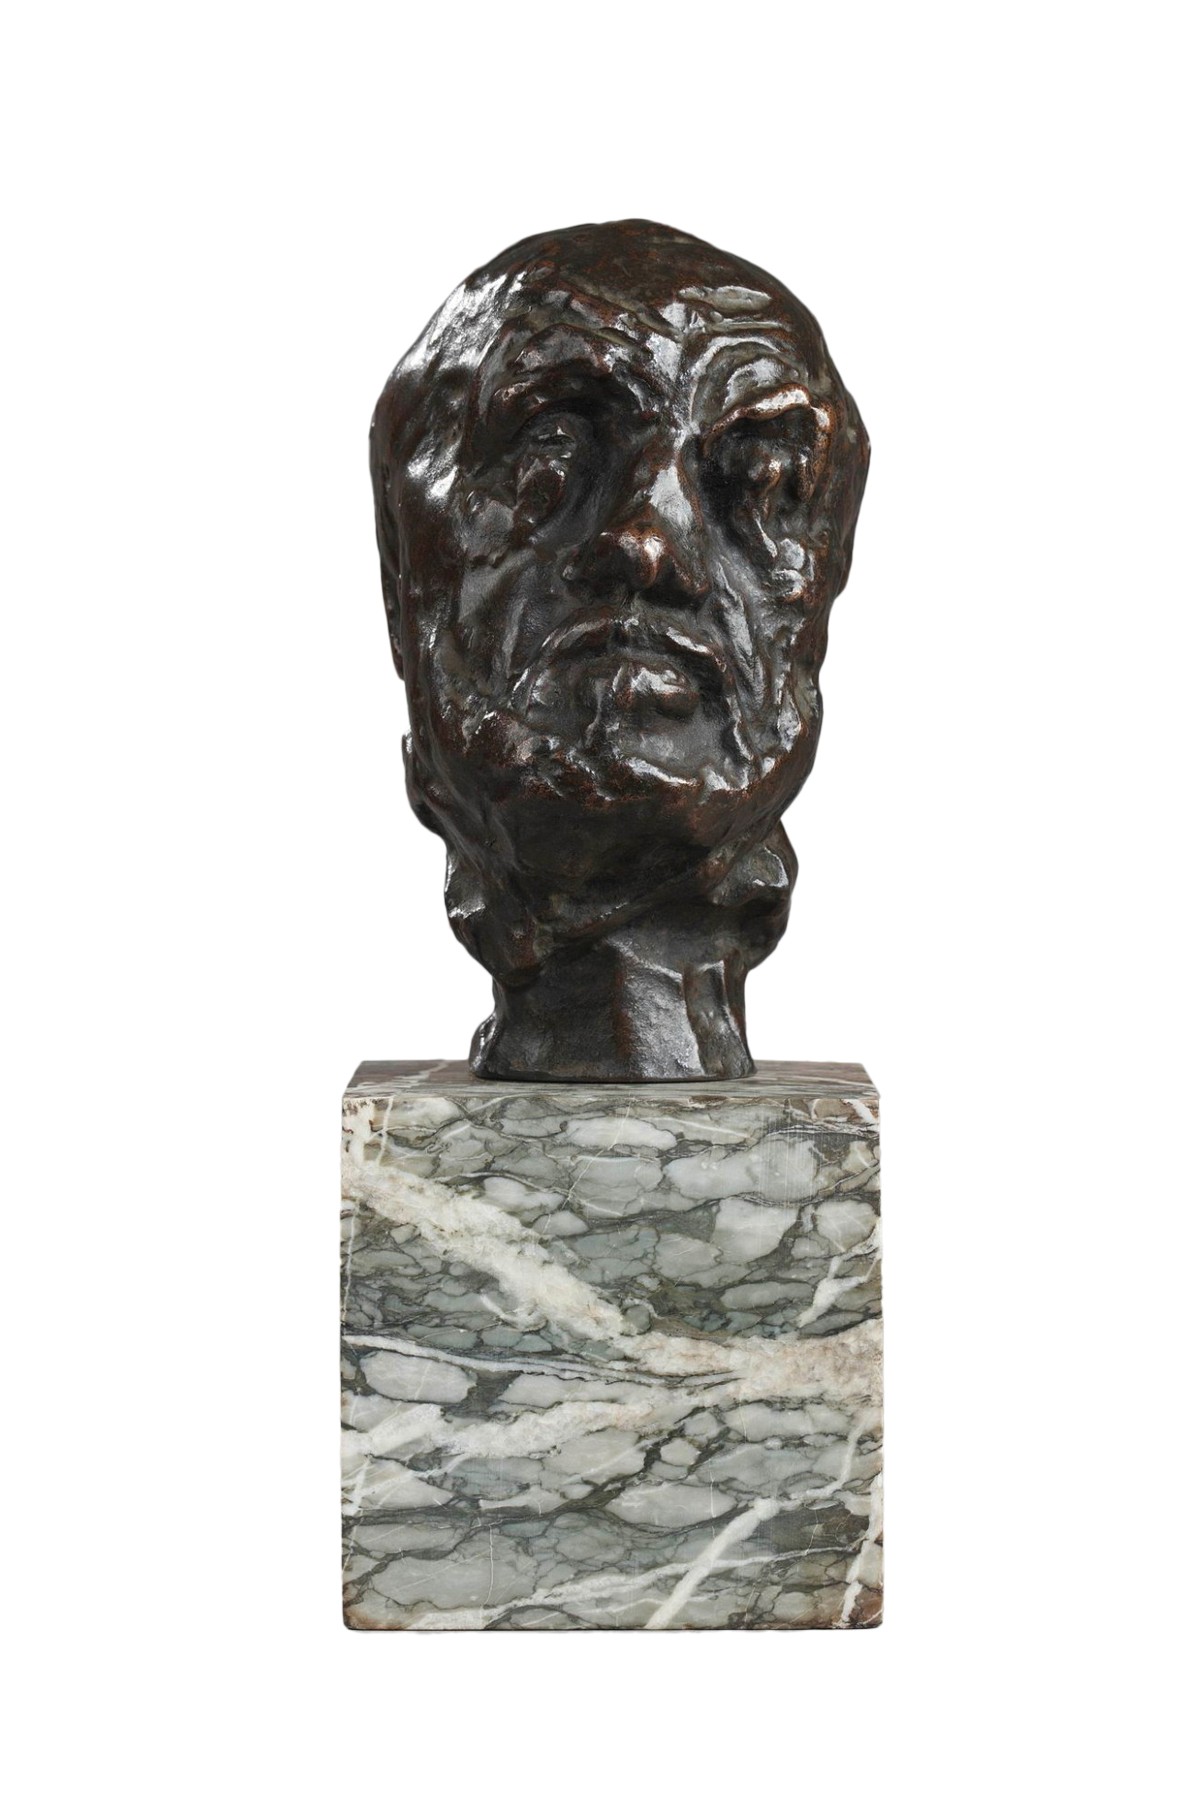 Auguste Rodin, The Age of Bronze (L'Age d'airain), French